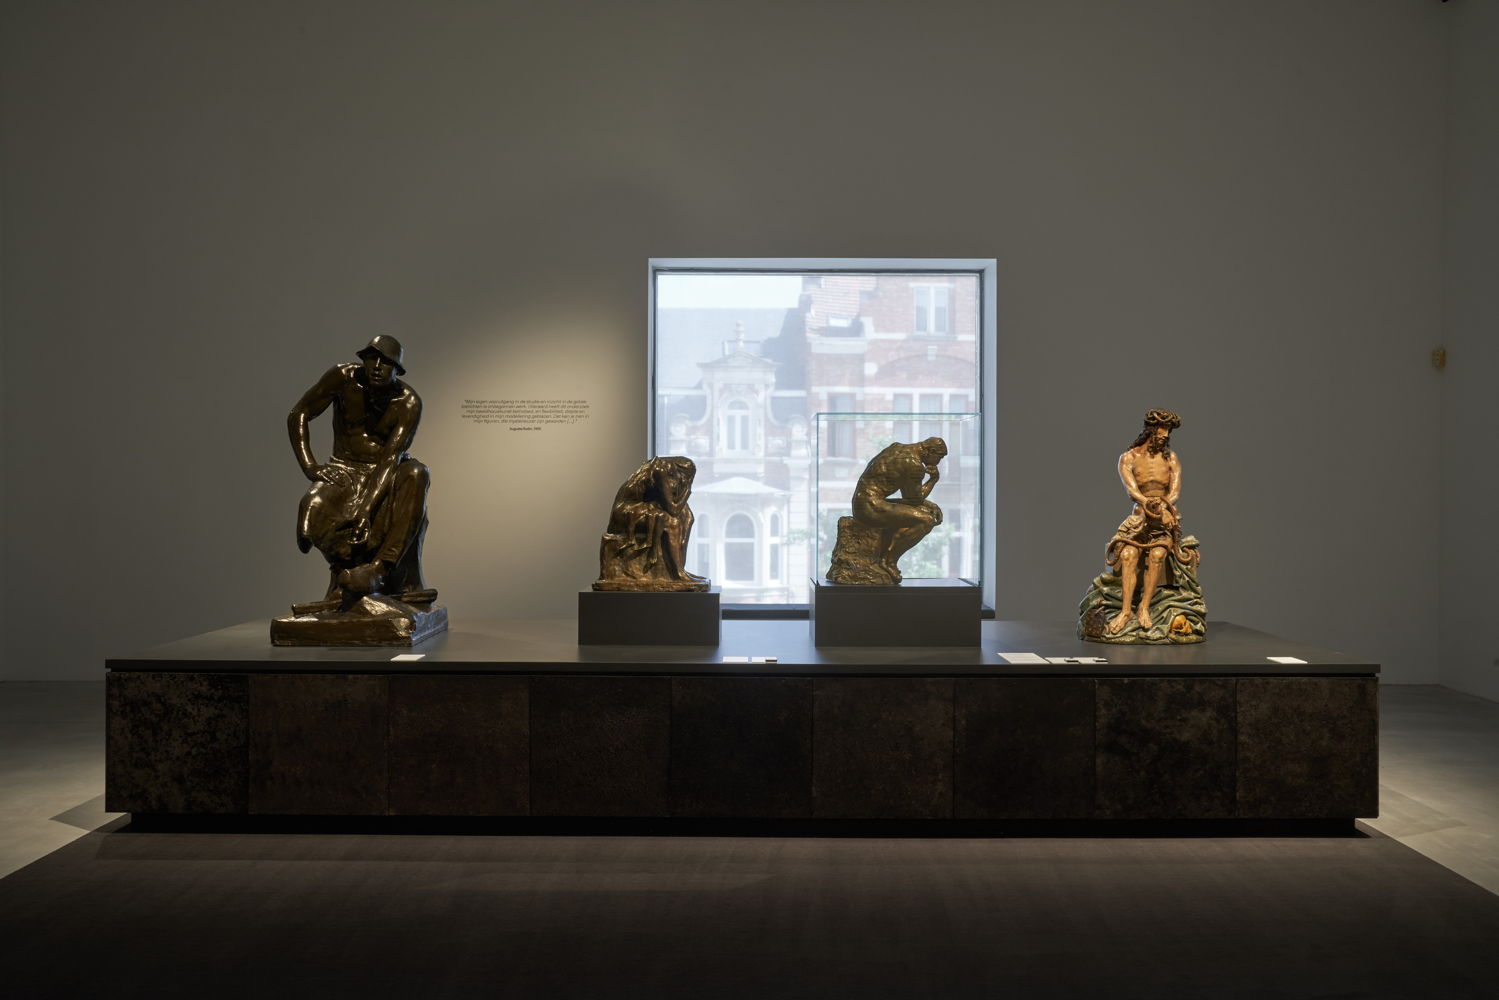 Exhibition view 'Rodin, Meunier & Minne' at M © Dirk Pauwels